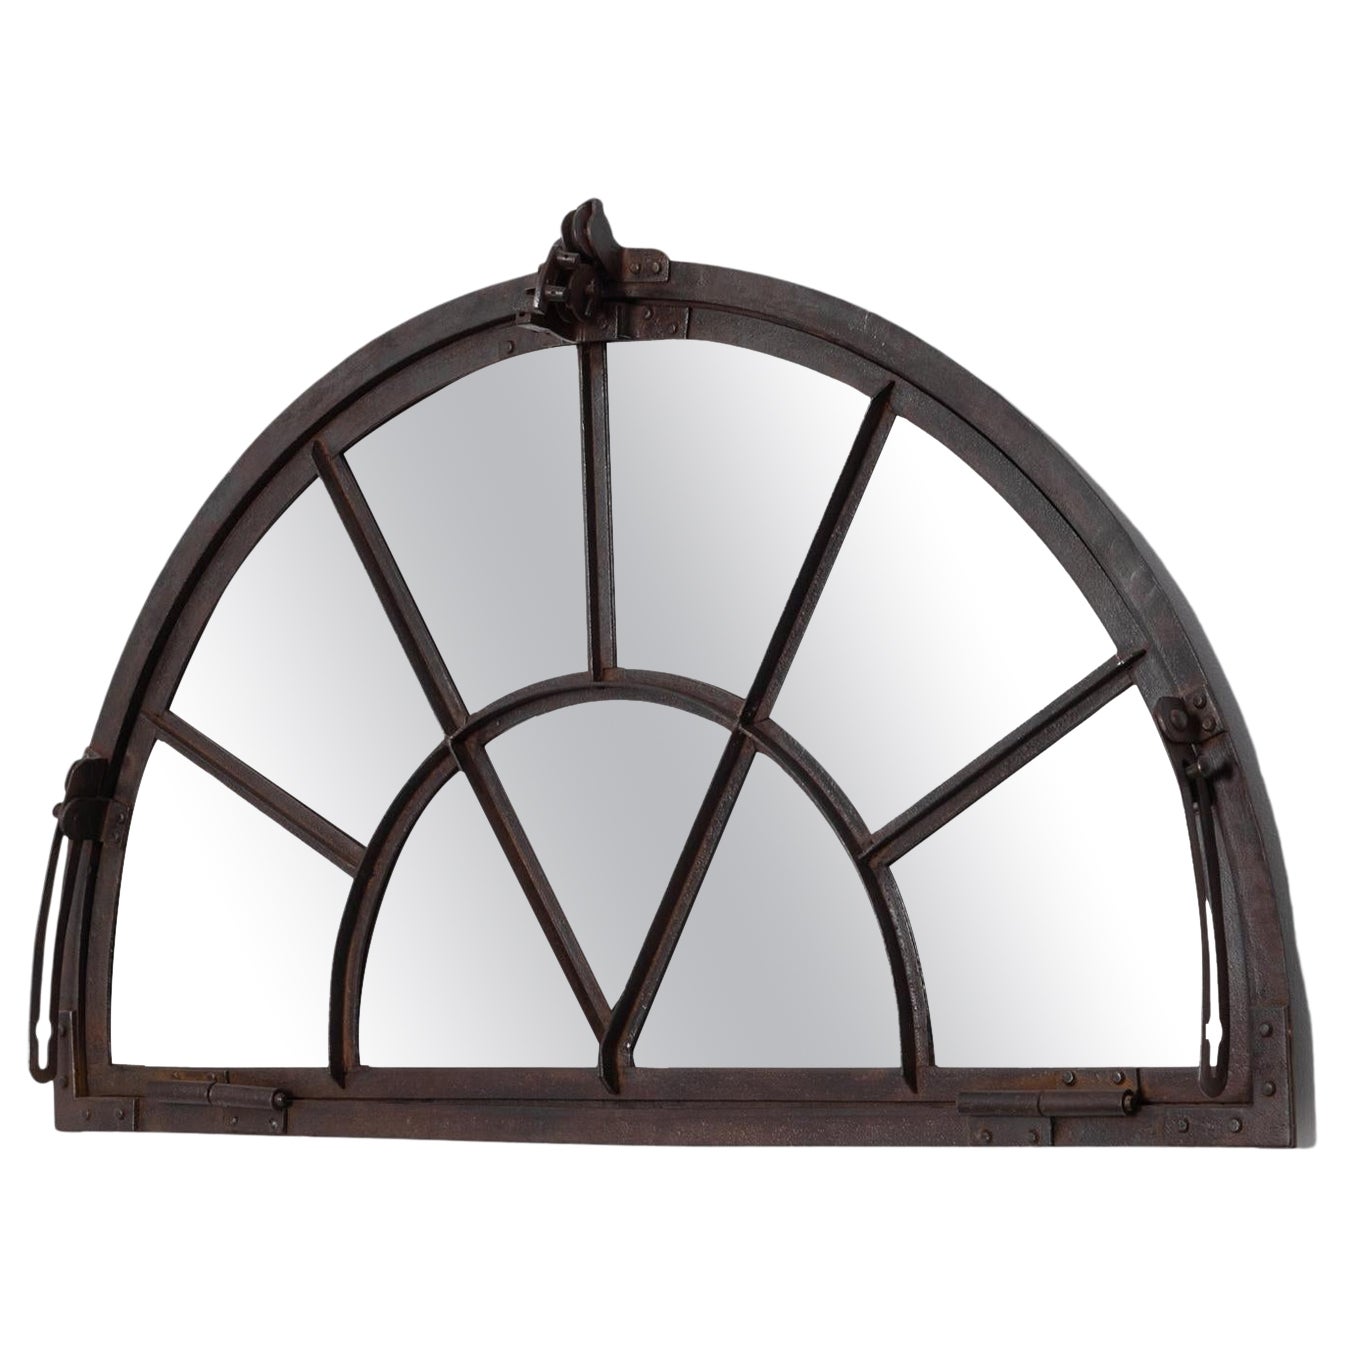 1900s French Iron Mirrored Window